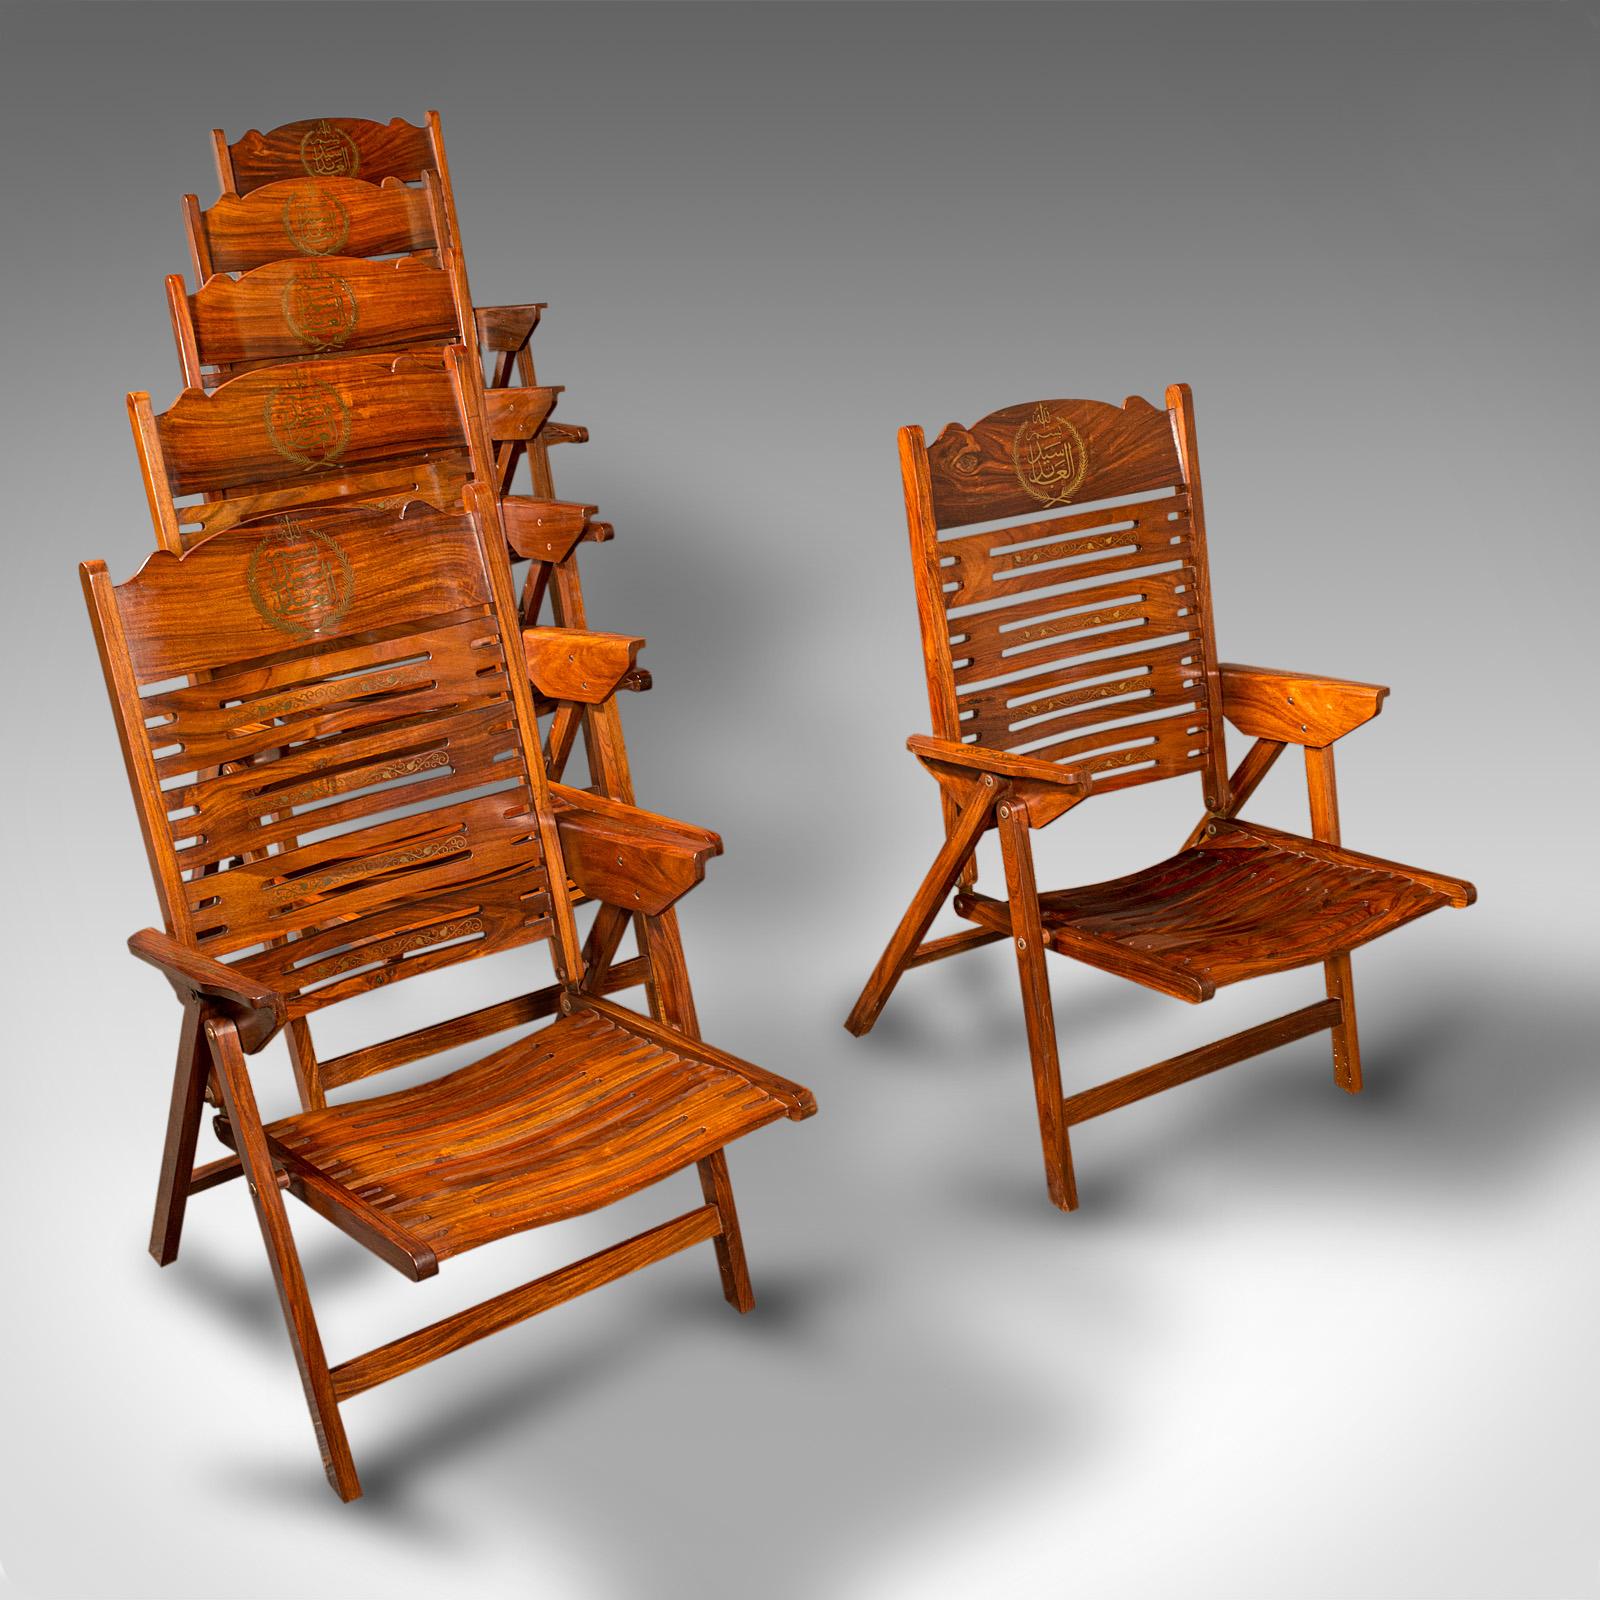 Unknown Set of 6 Vintage Terrace Chairs, Middle Eastern, Teak, Folding, Veranda, Steamer